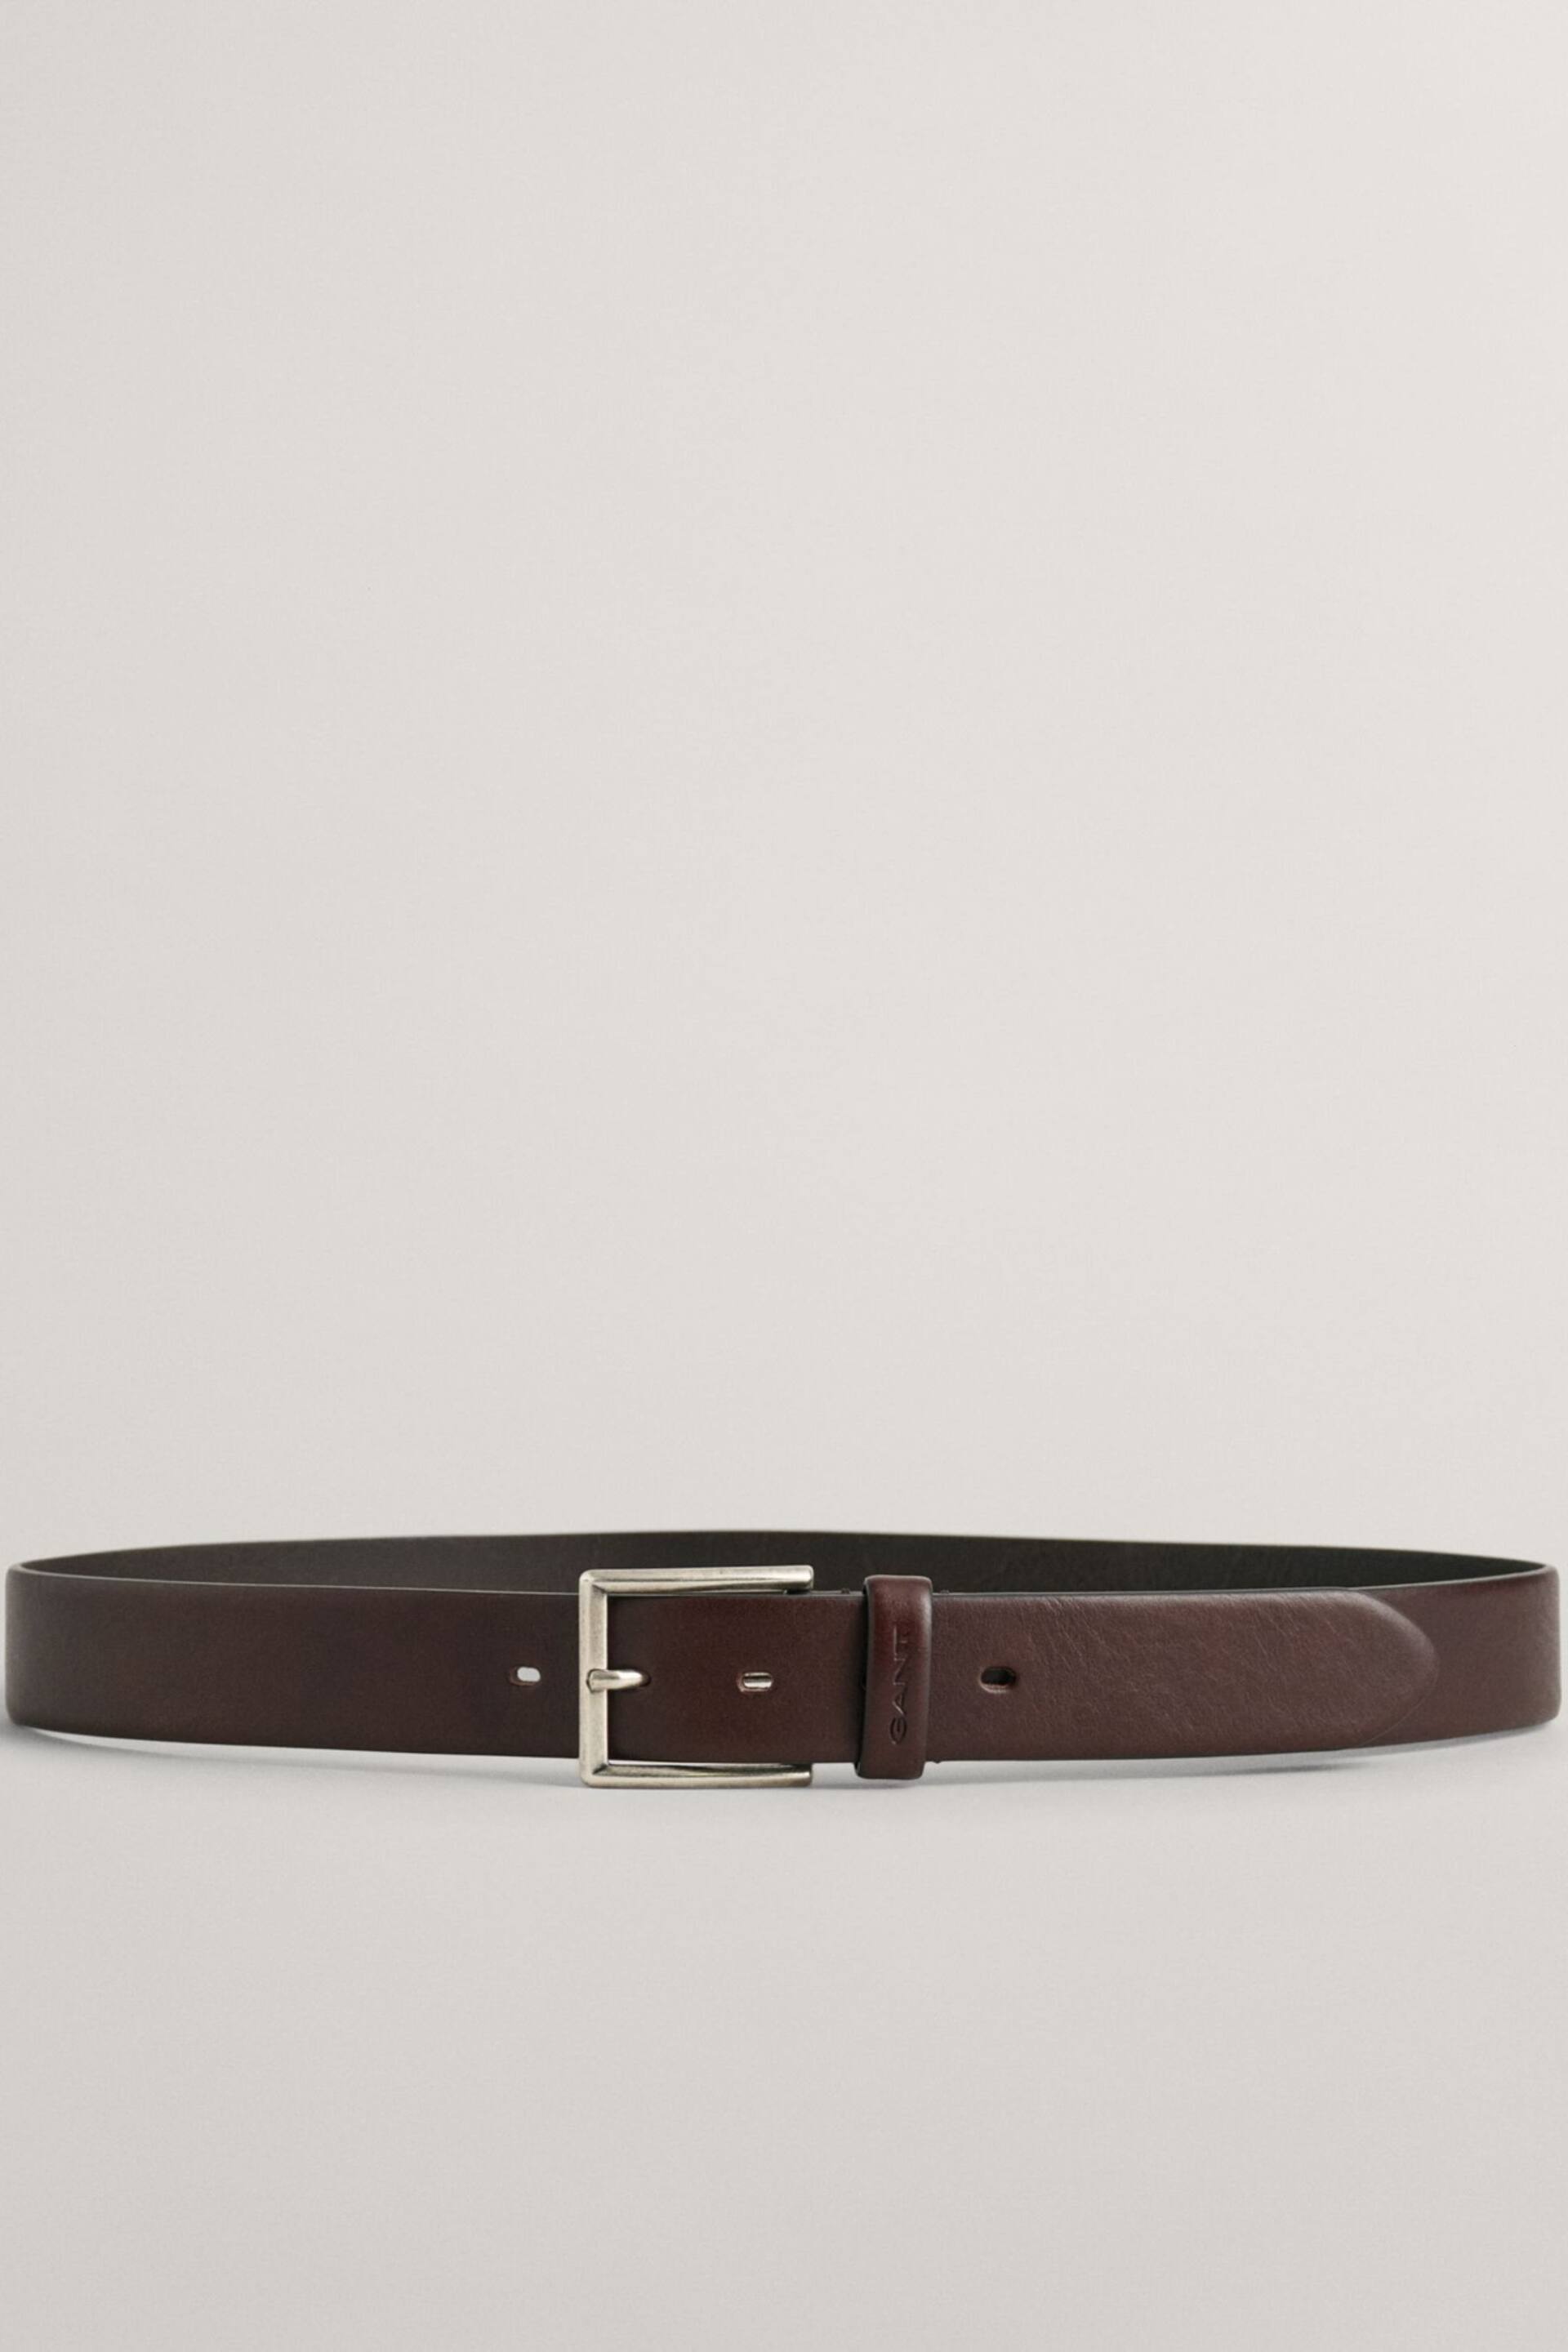 GANT Classic Leather Belt - Image 2 of 2